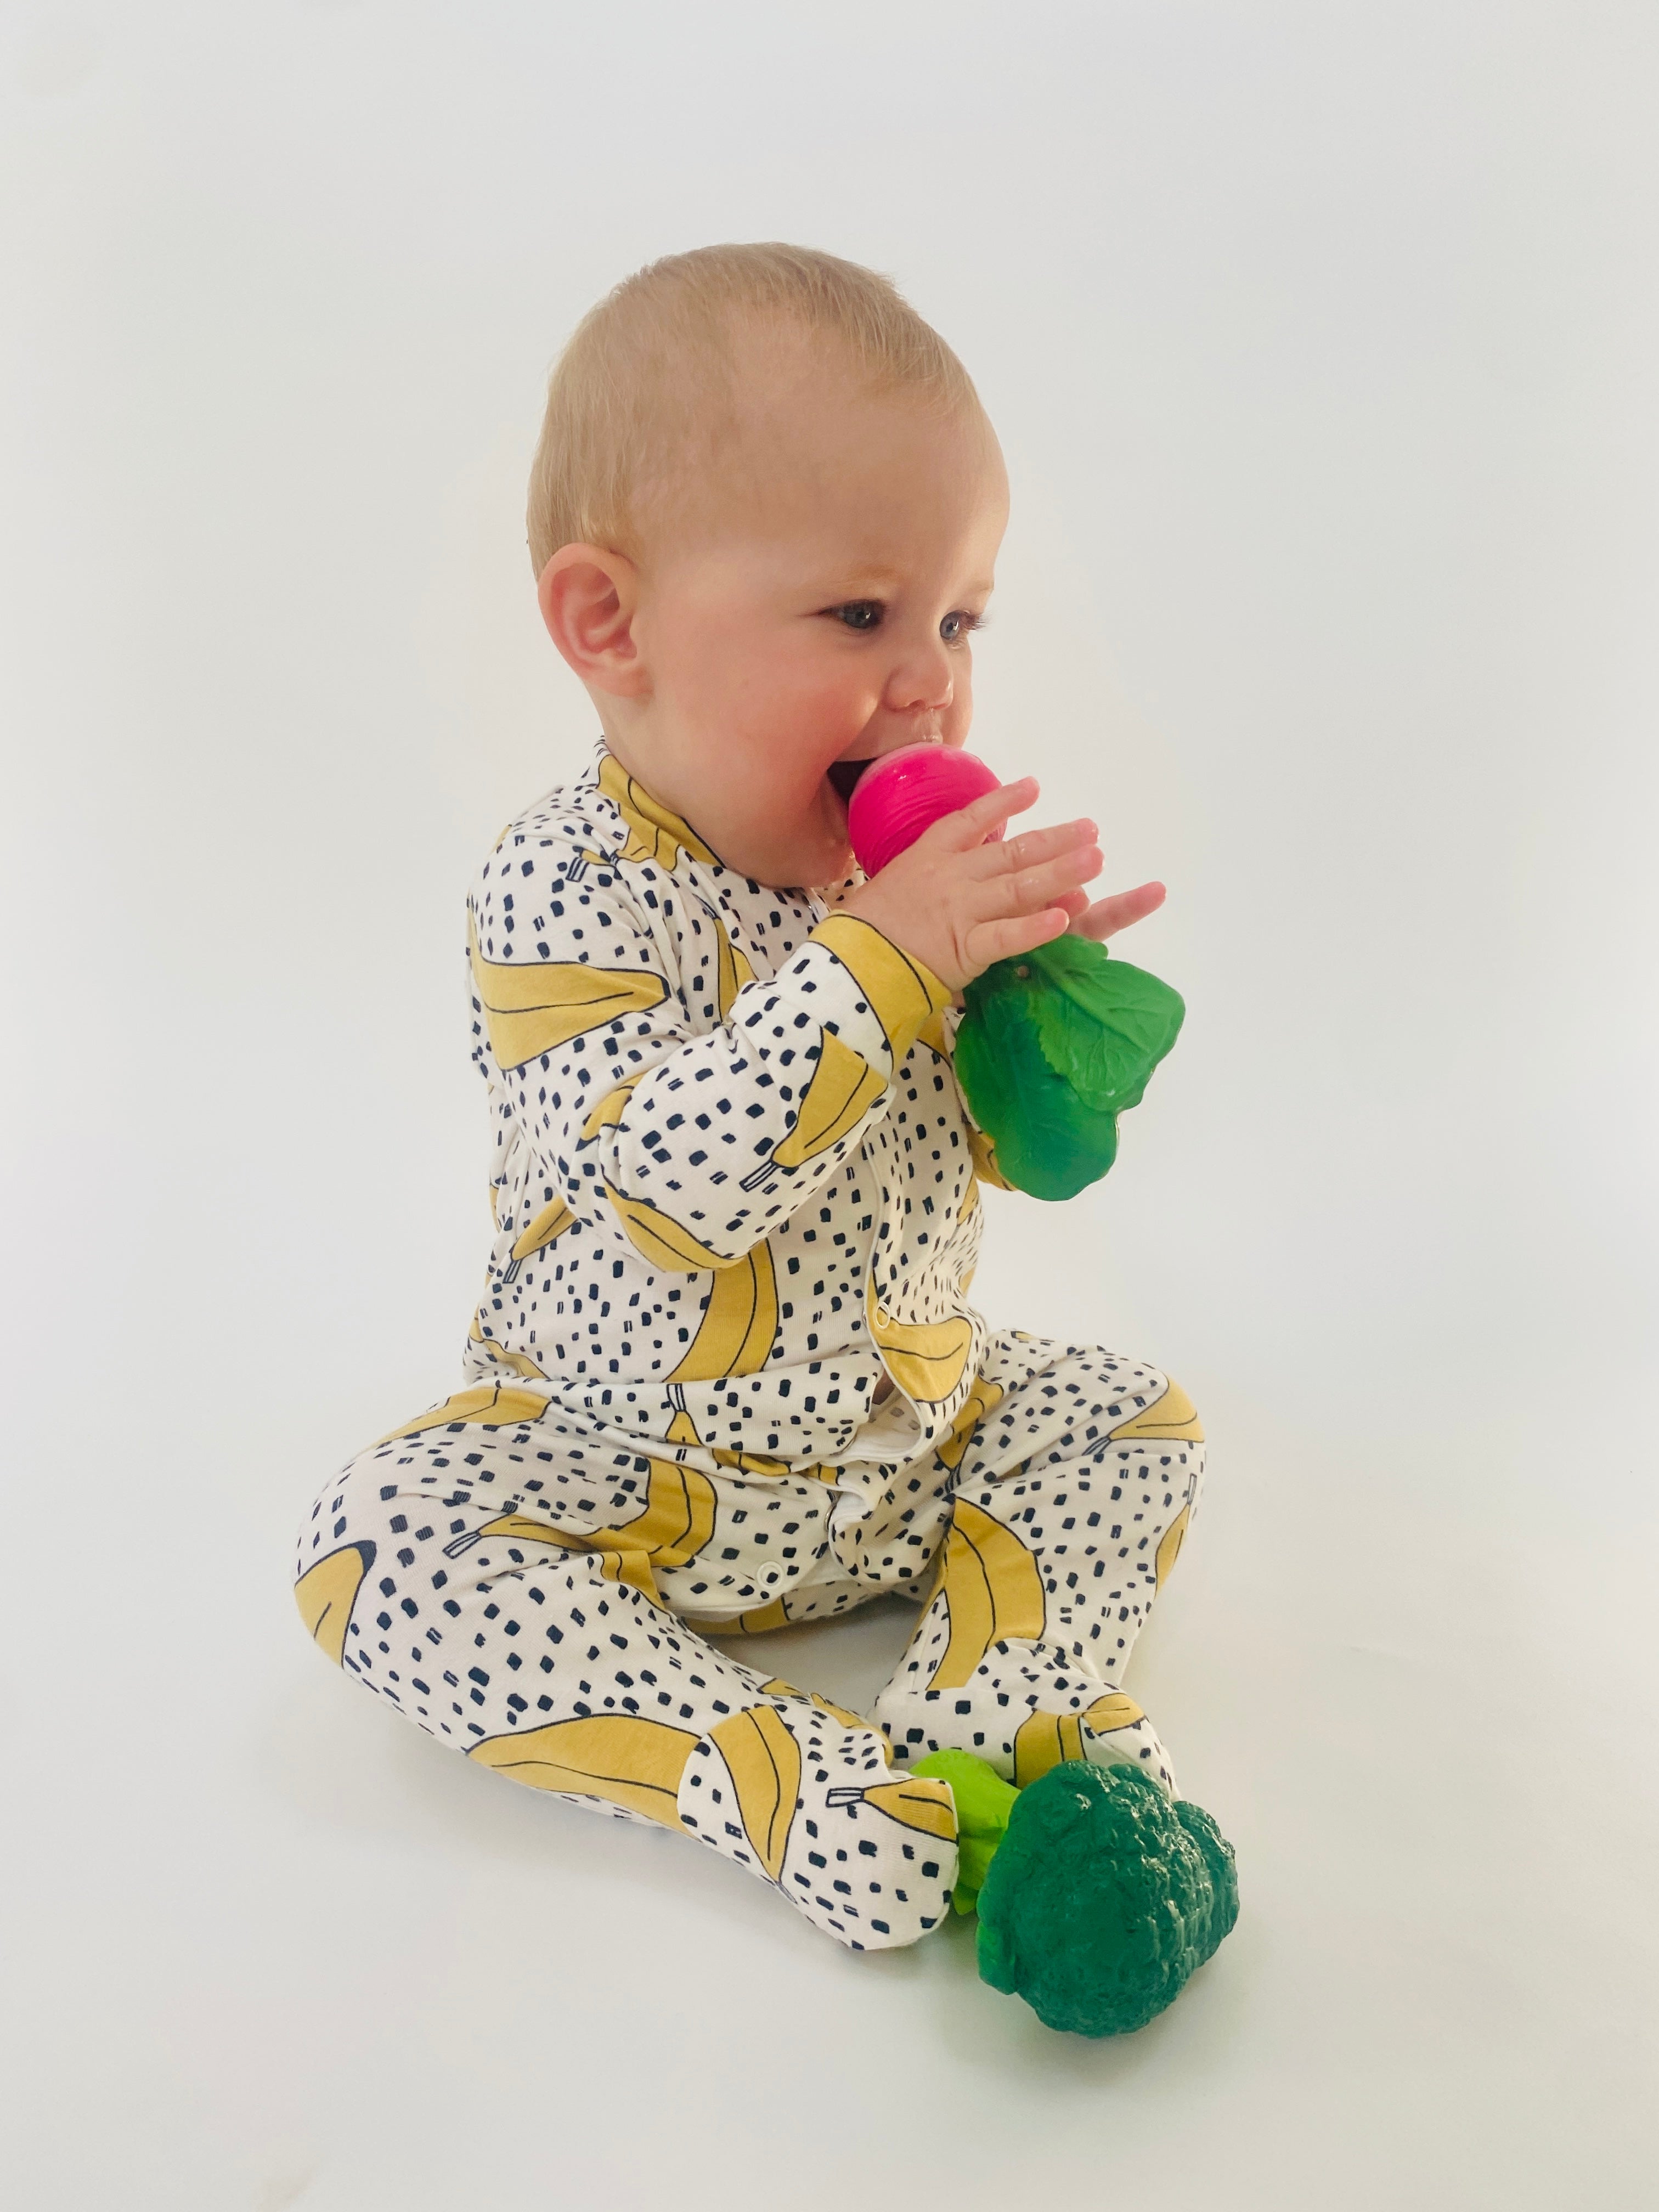 Eddie & Bee organic cotton Baby sleepsuit  in Cream "Banana POP" print.